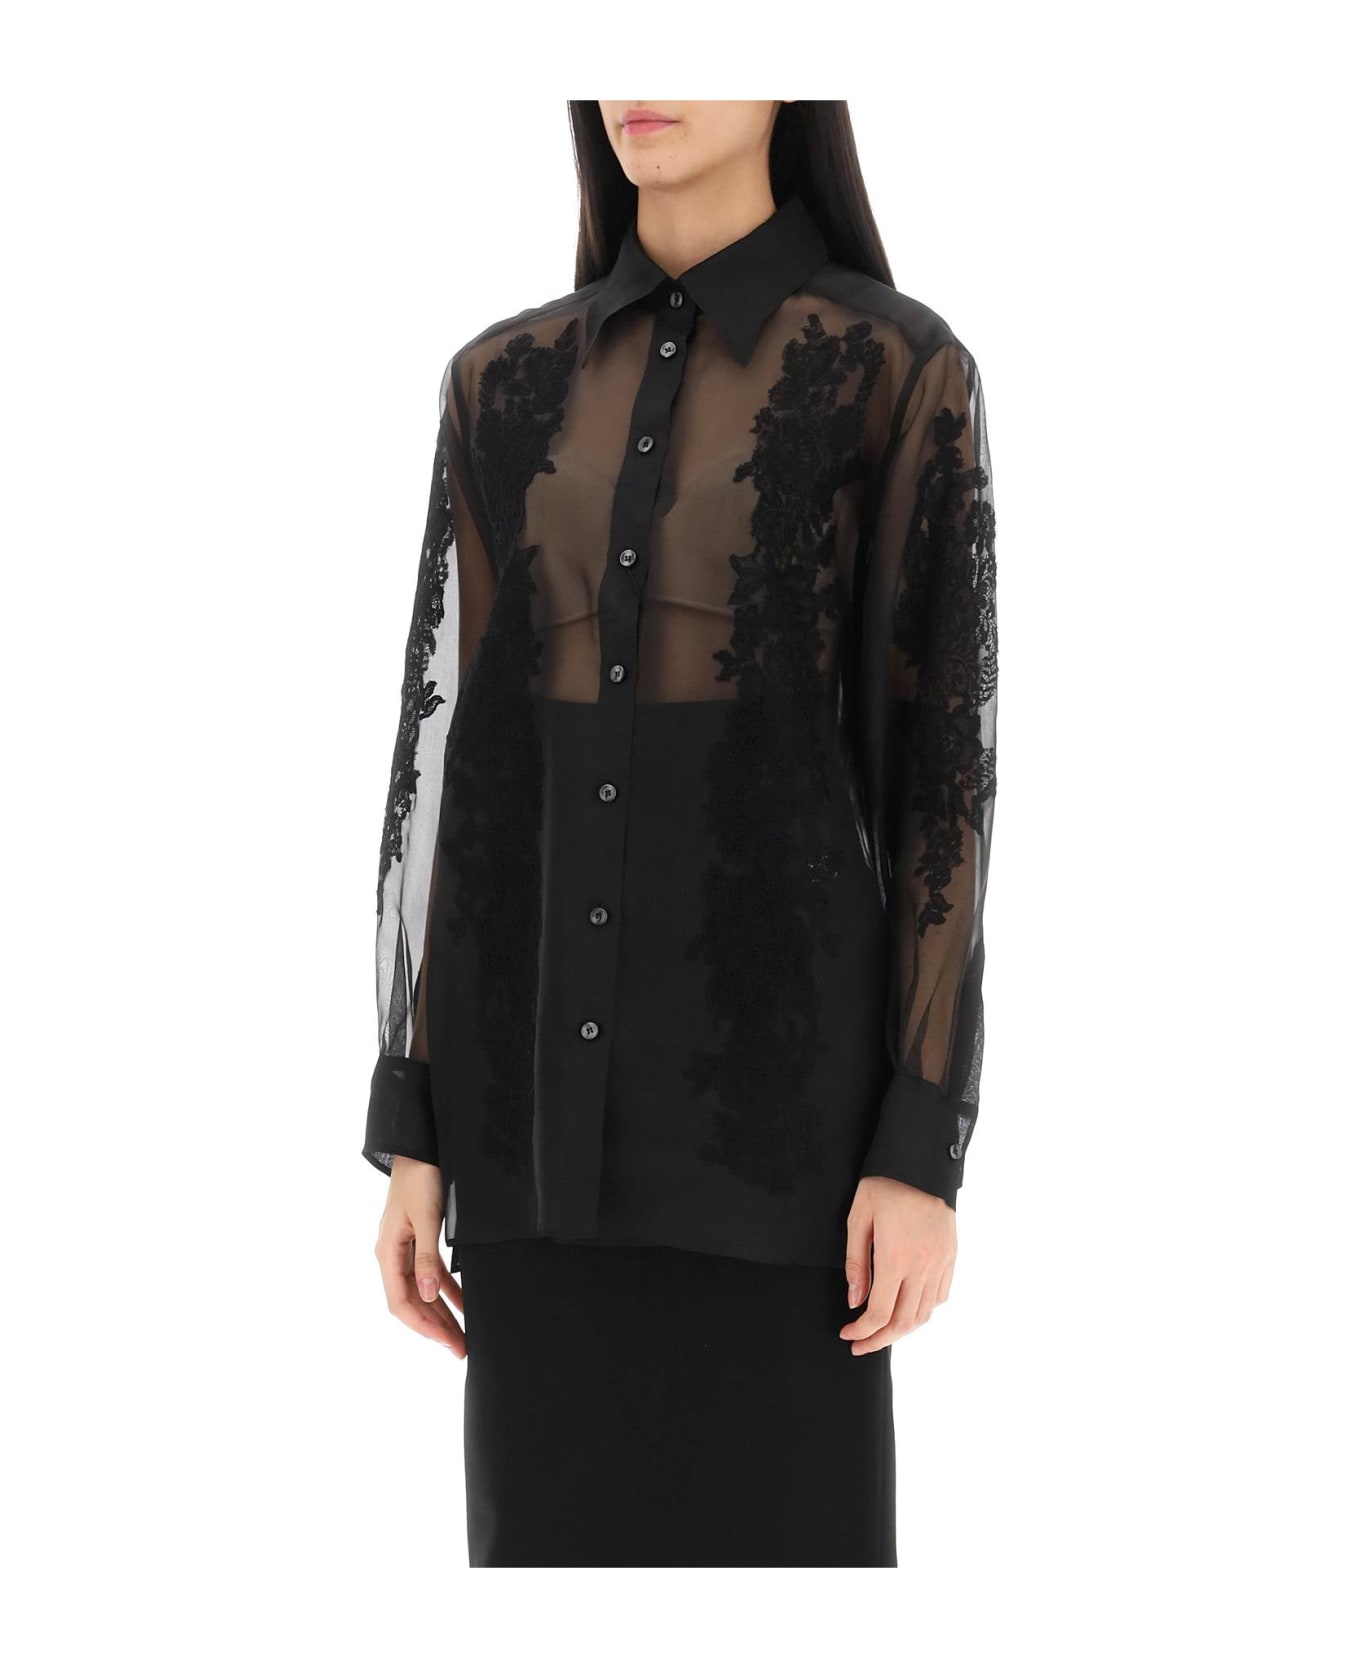 Dolce & Gabbana Organza Shirt With Lace Inserts - NERO (Black)